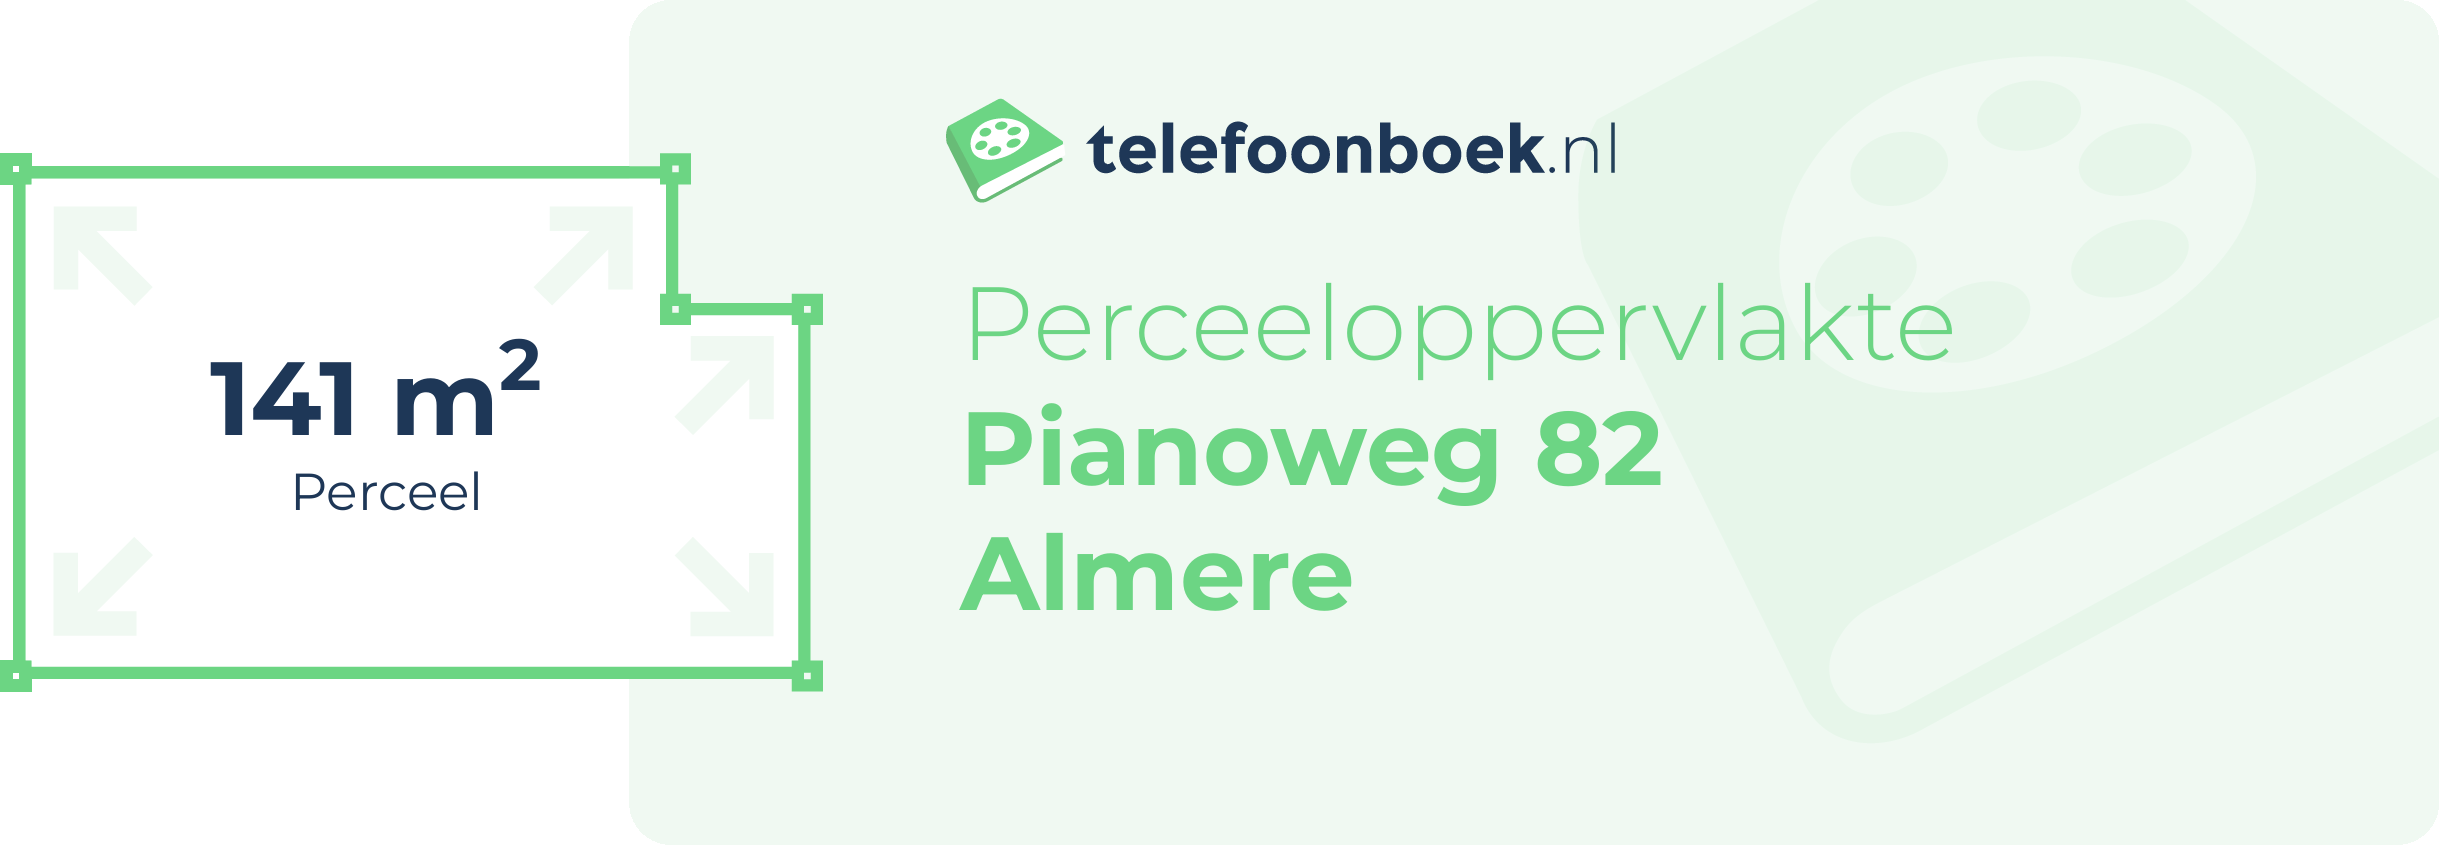 Perceeloppervlakte Pianoweg 82 Almere